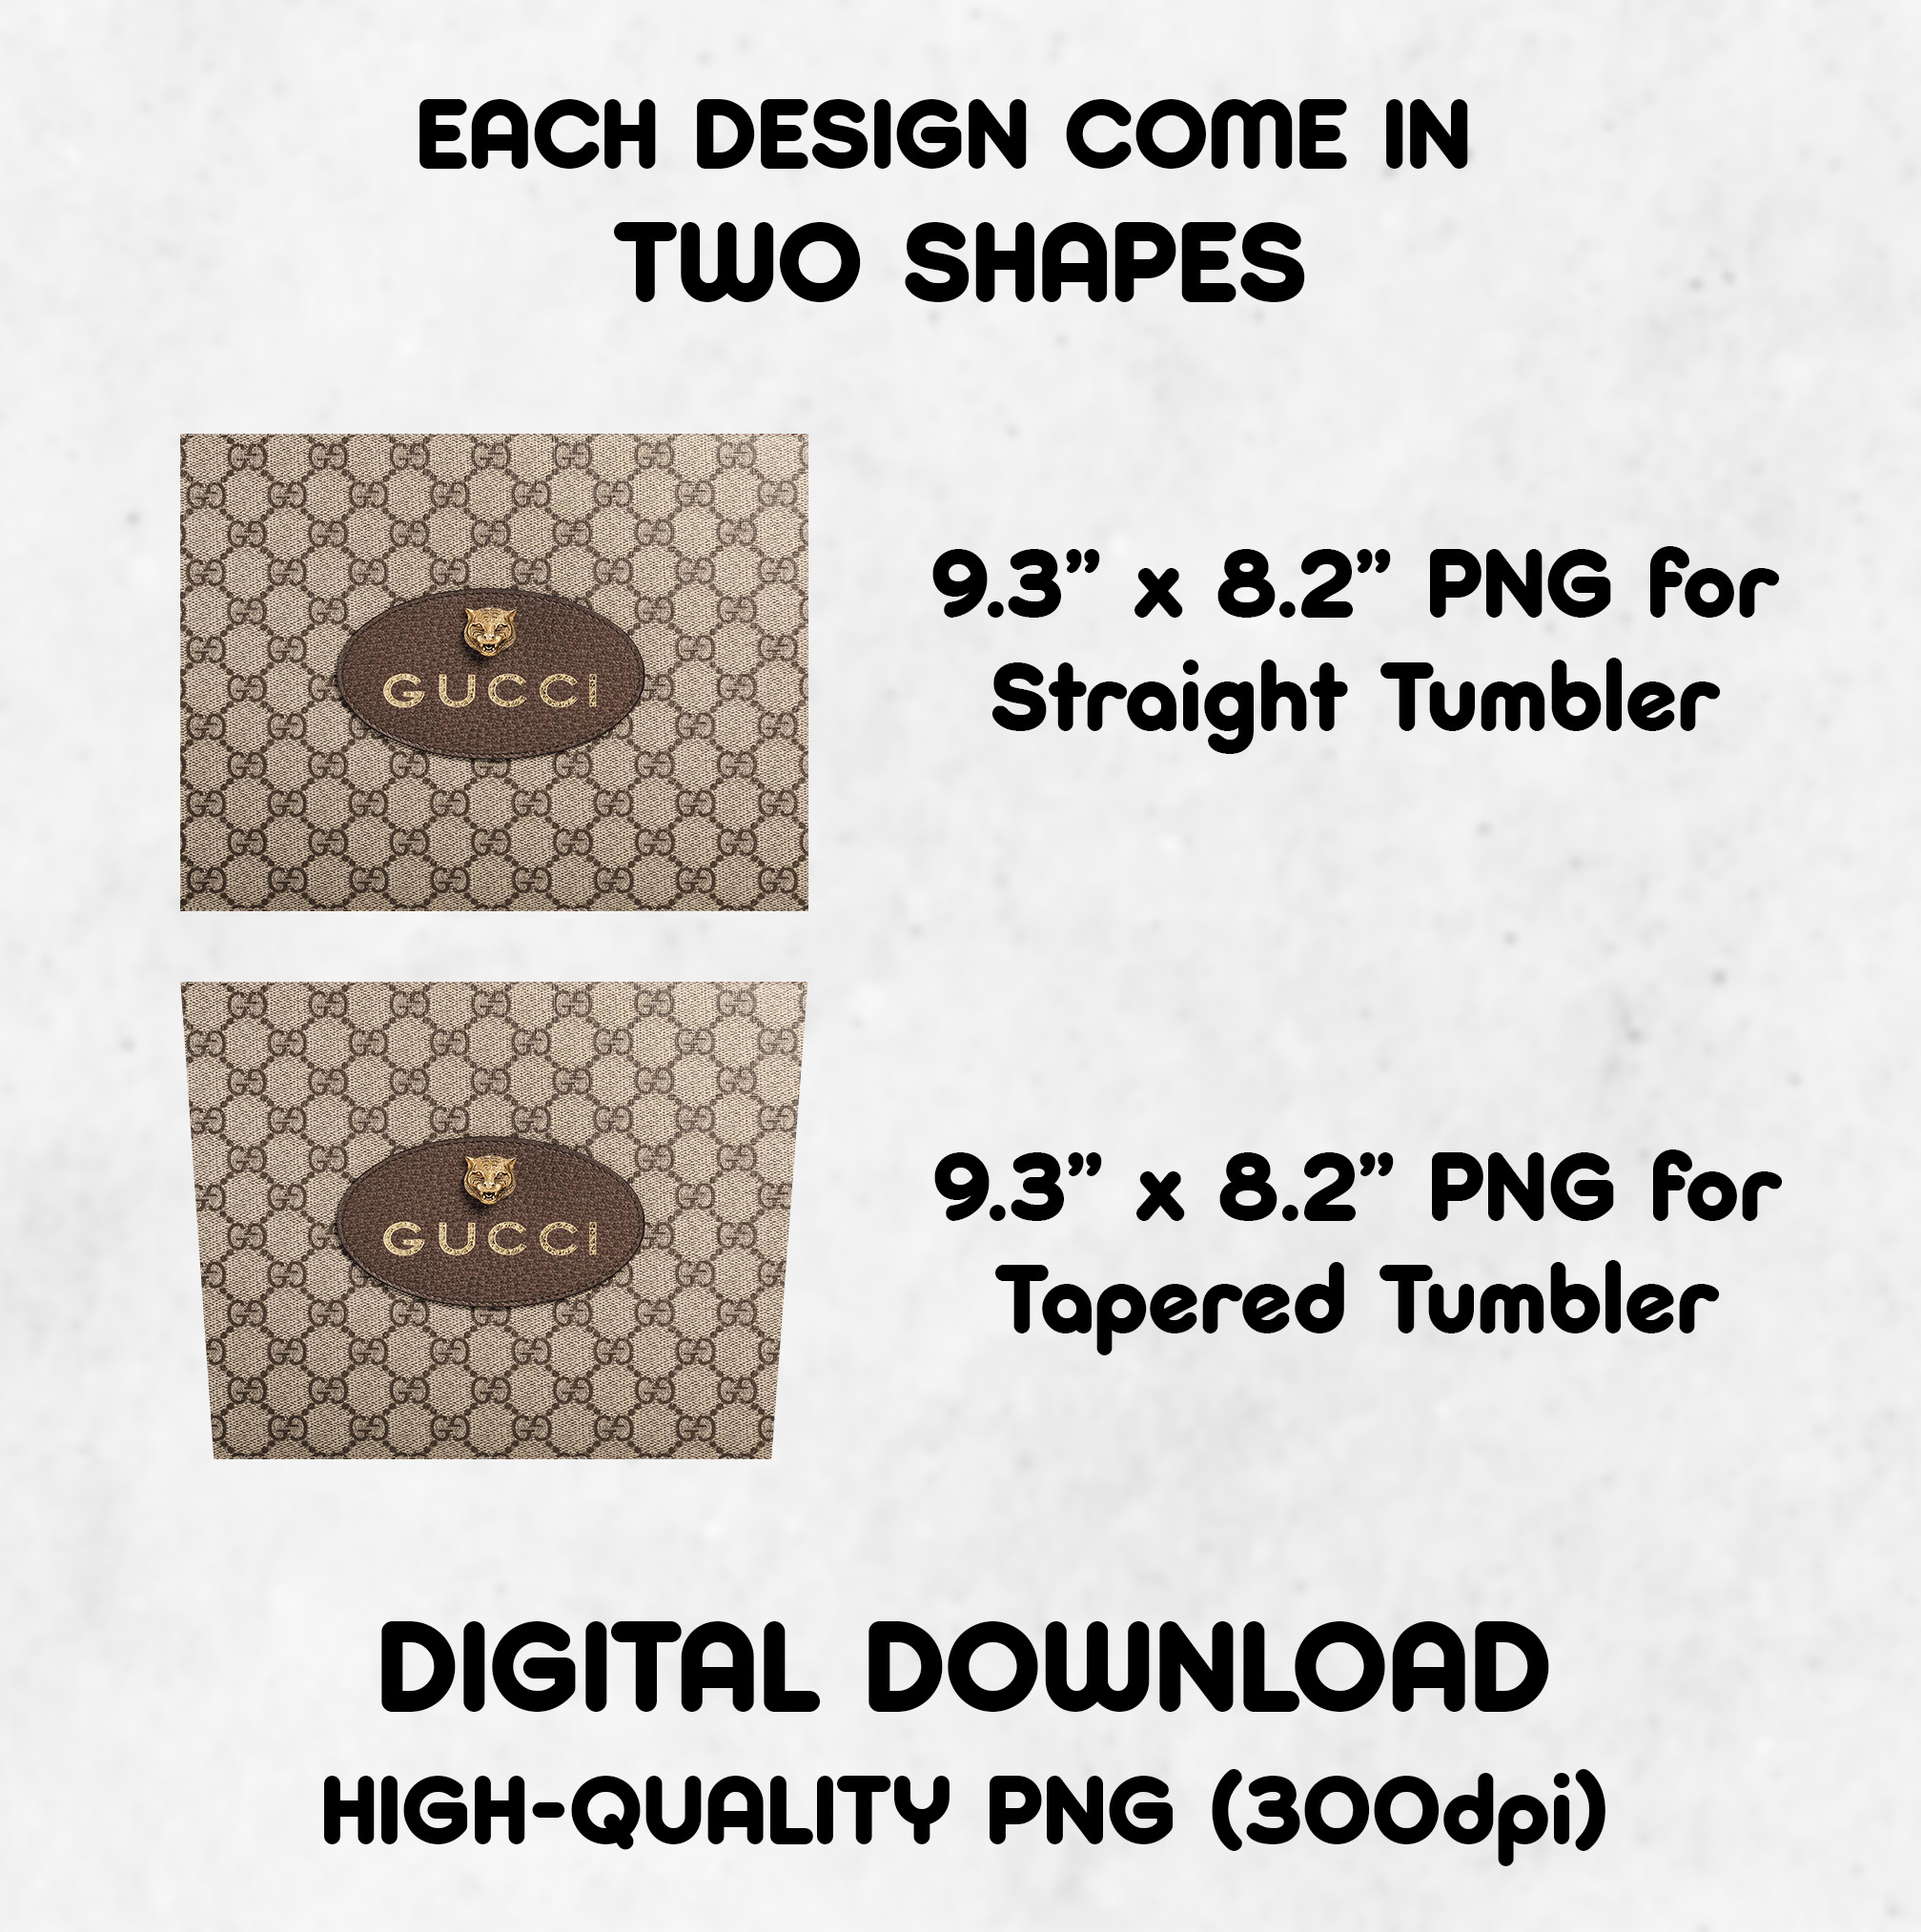 Gucci pattern SVG & PNG Download - Free SVG Download